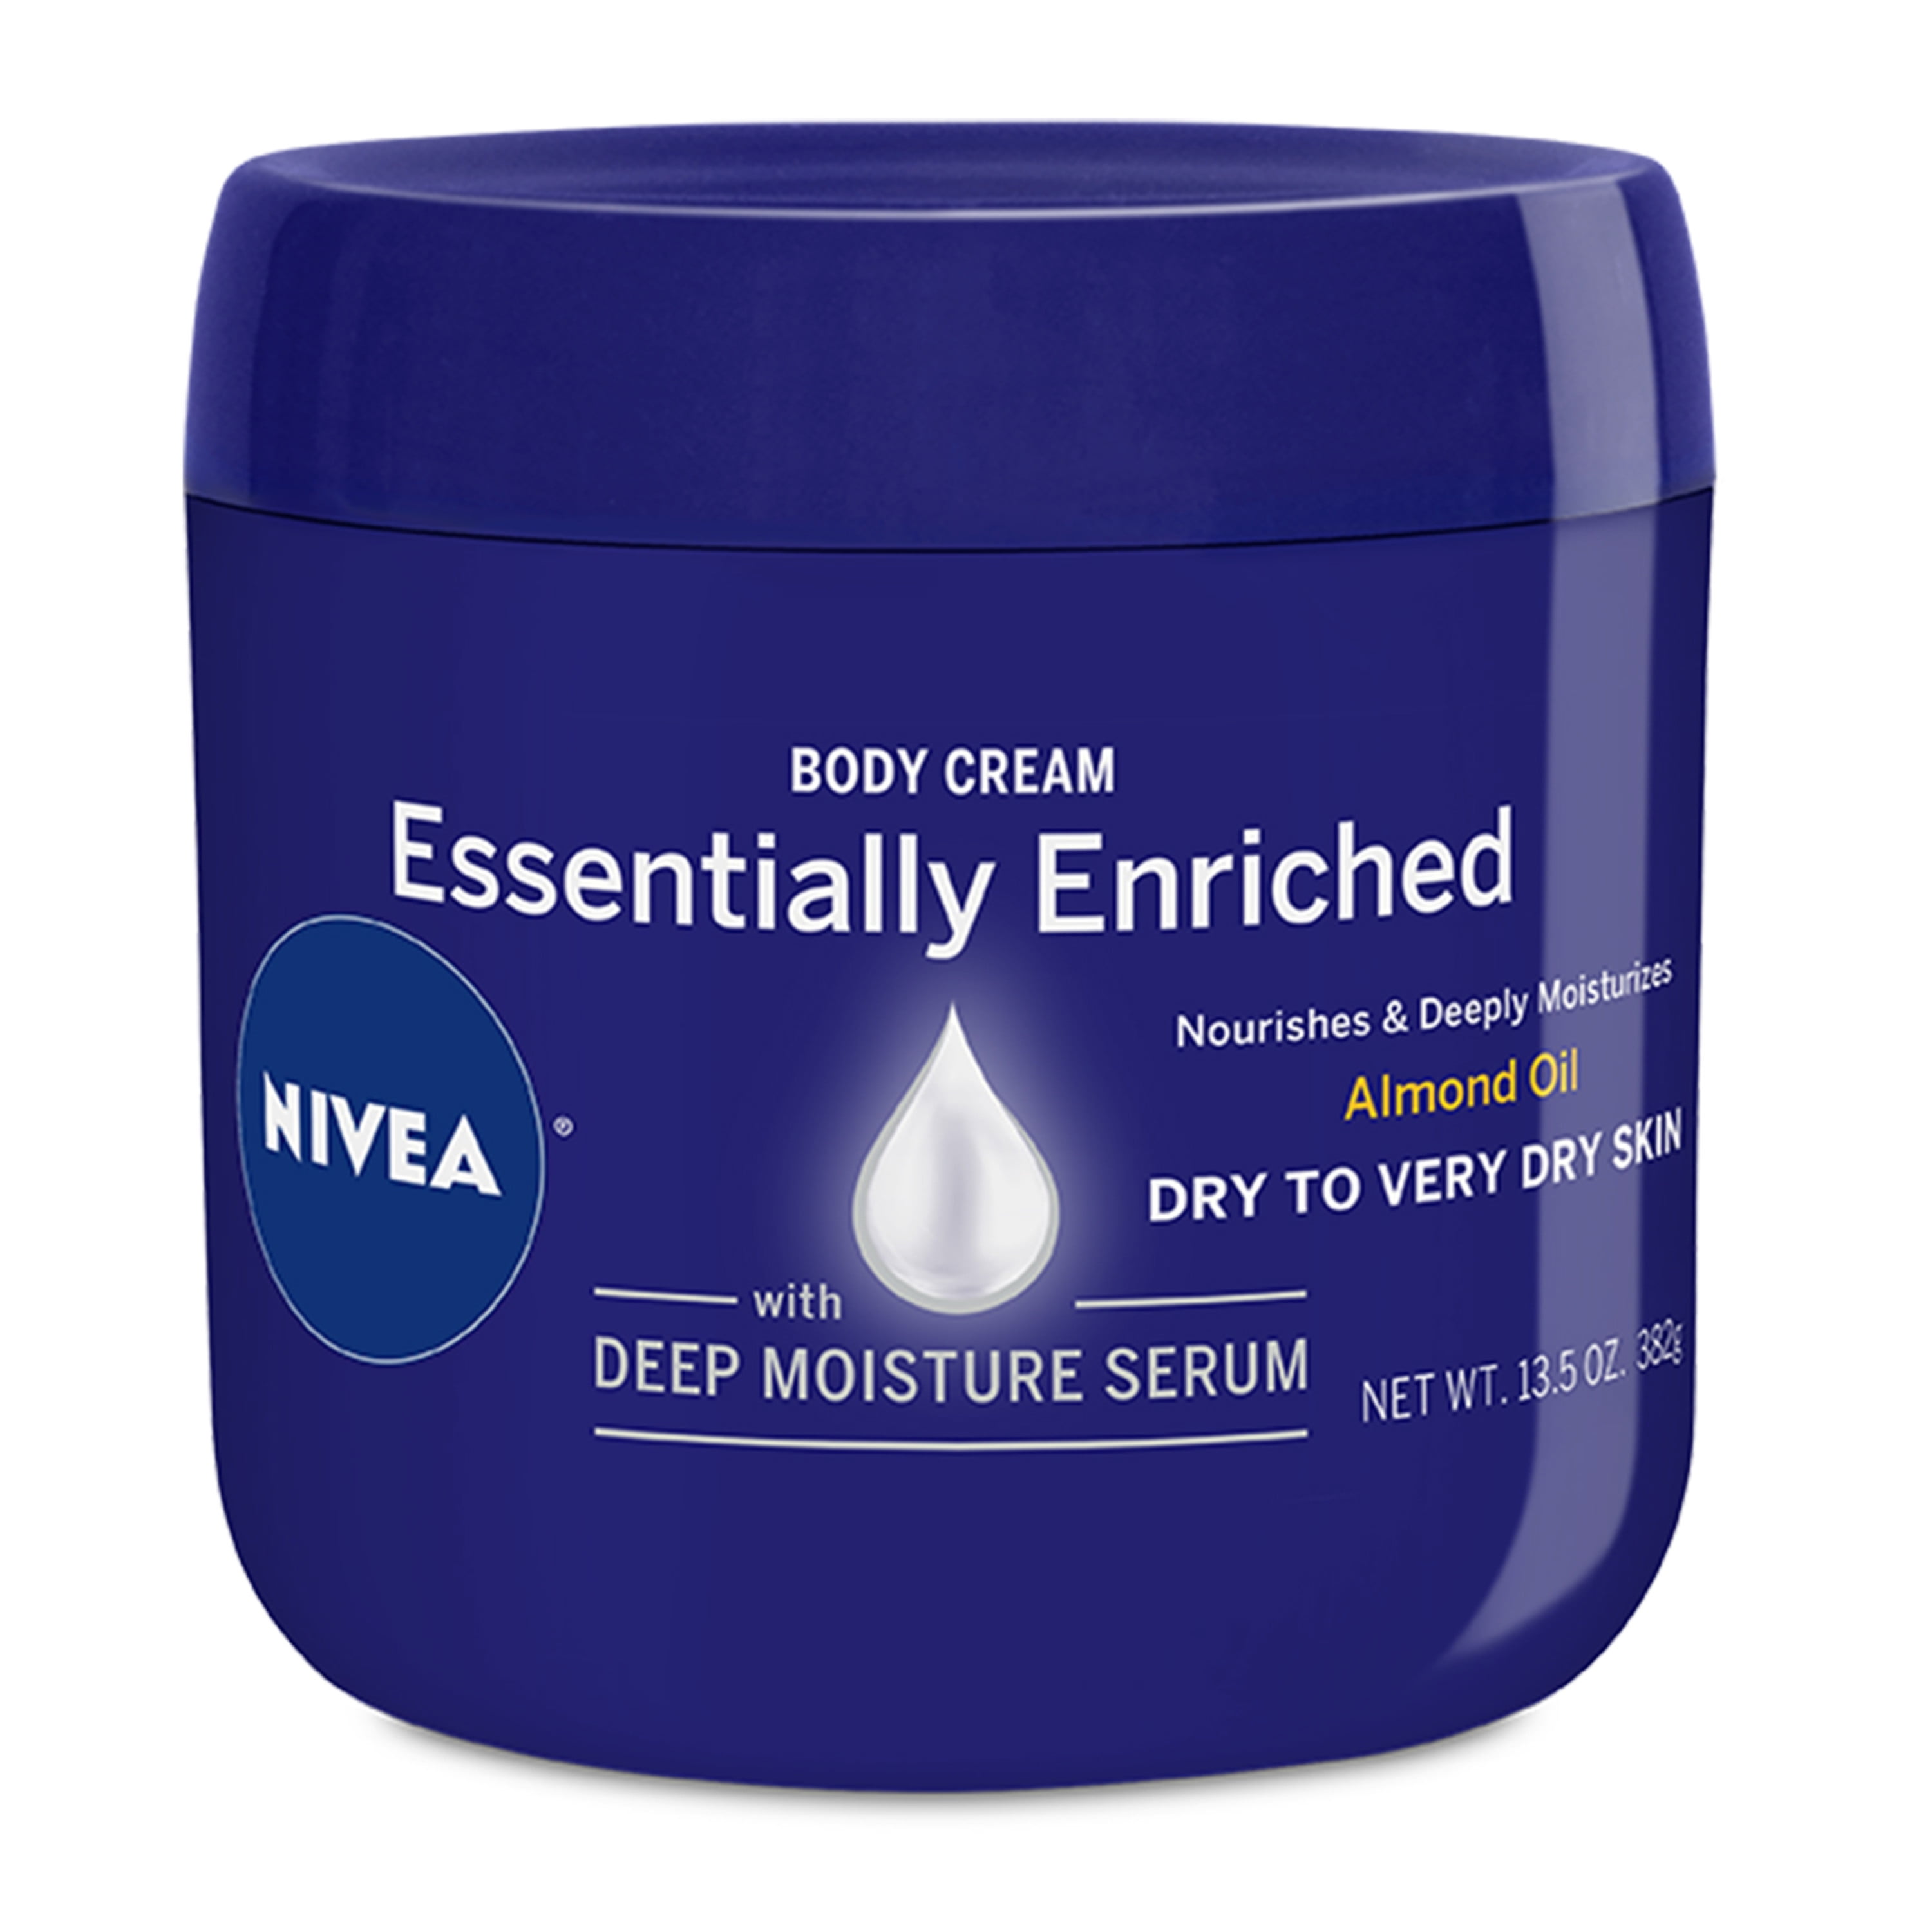 NIVEA Essentially Enriched Body Cream